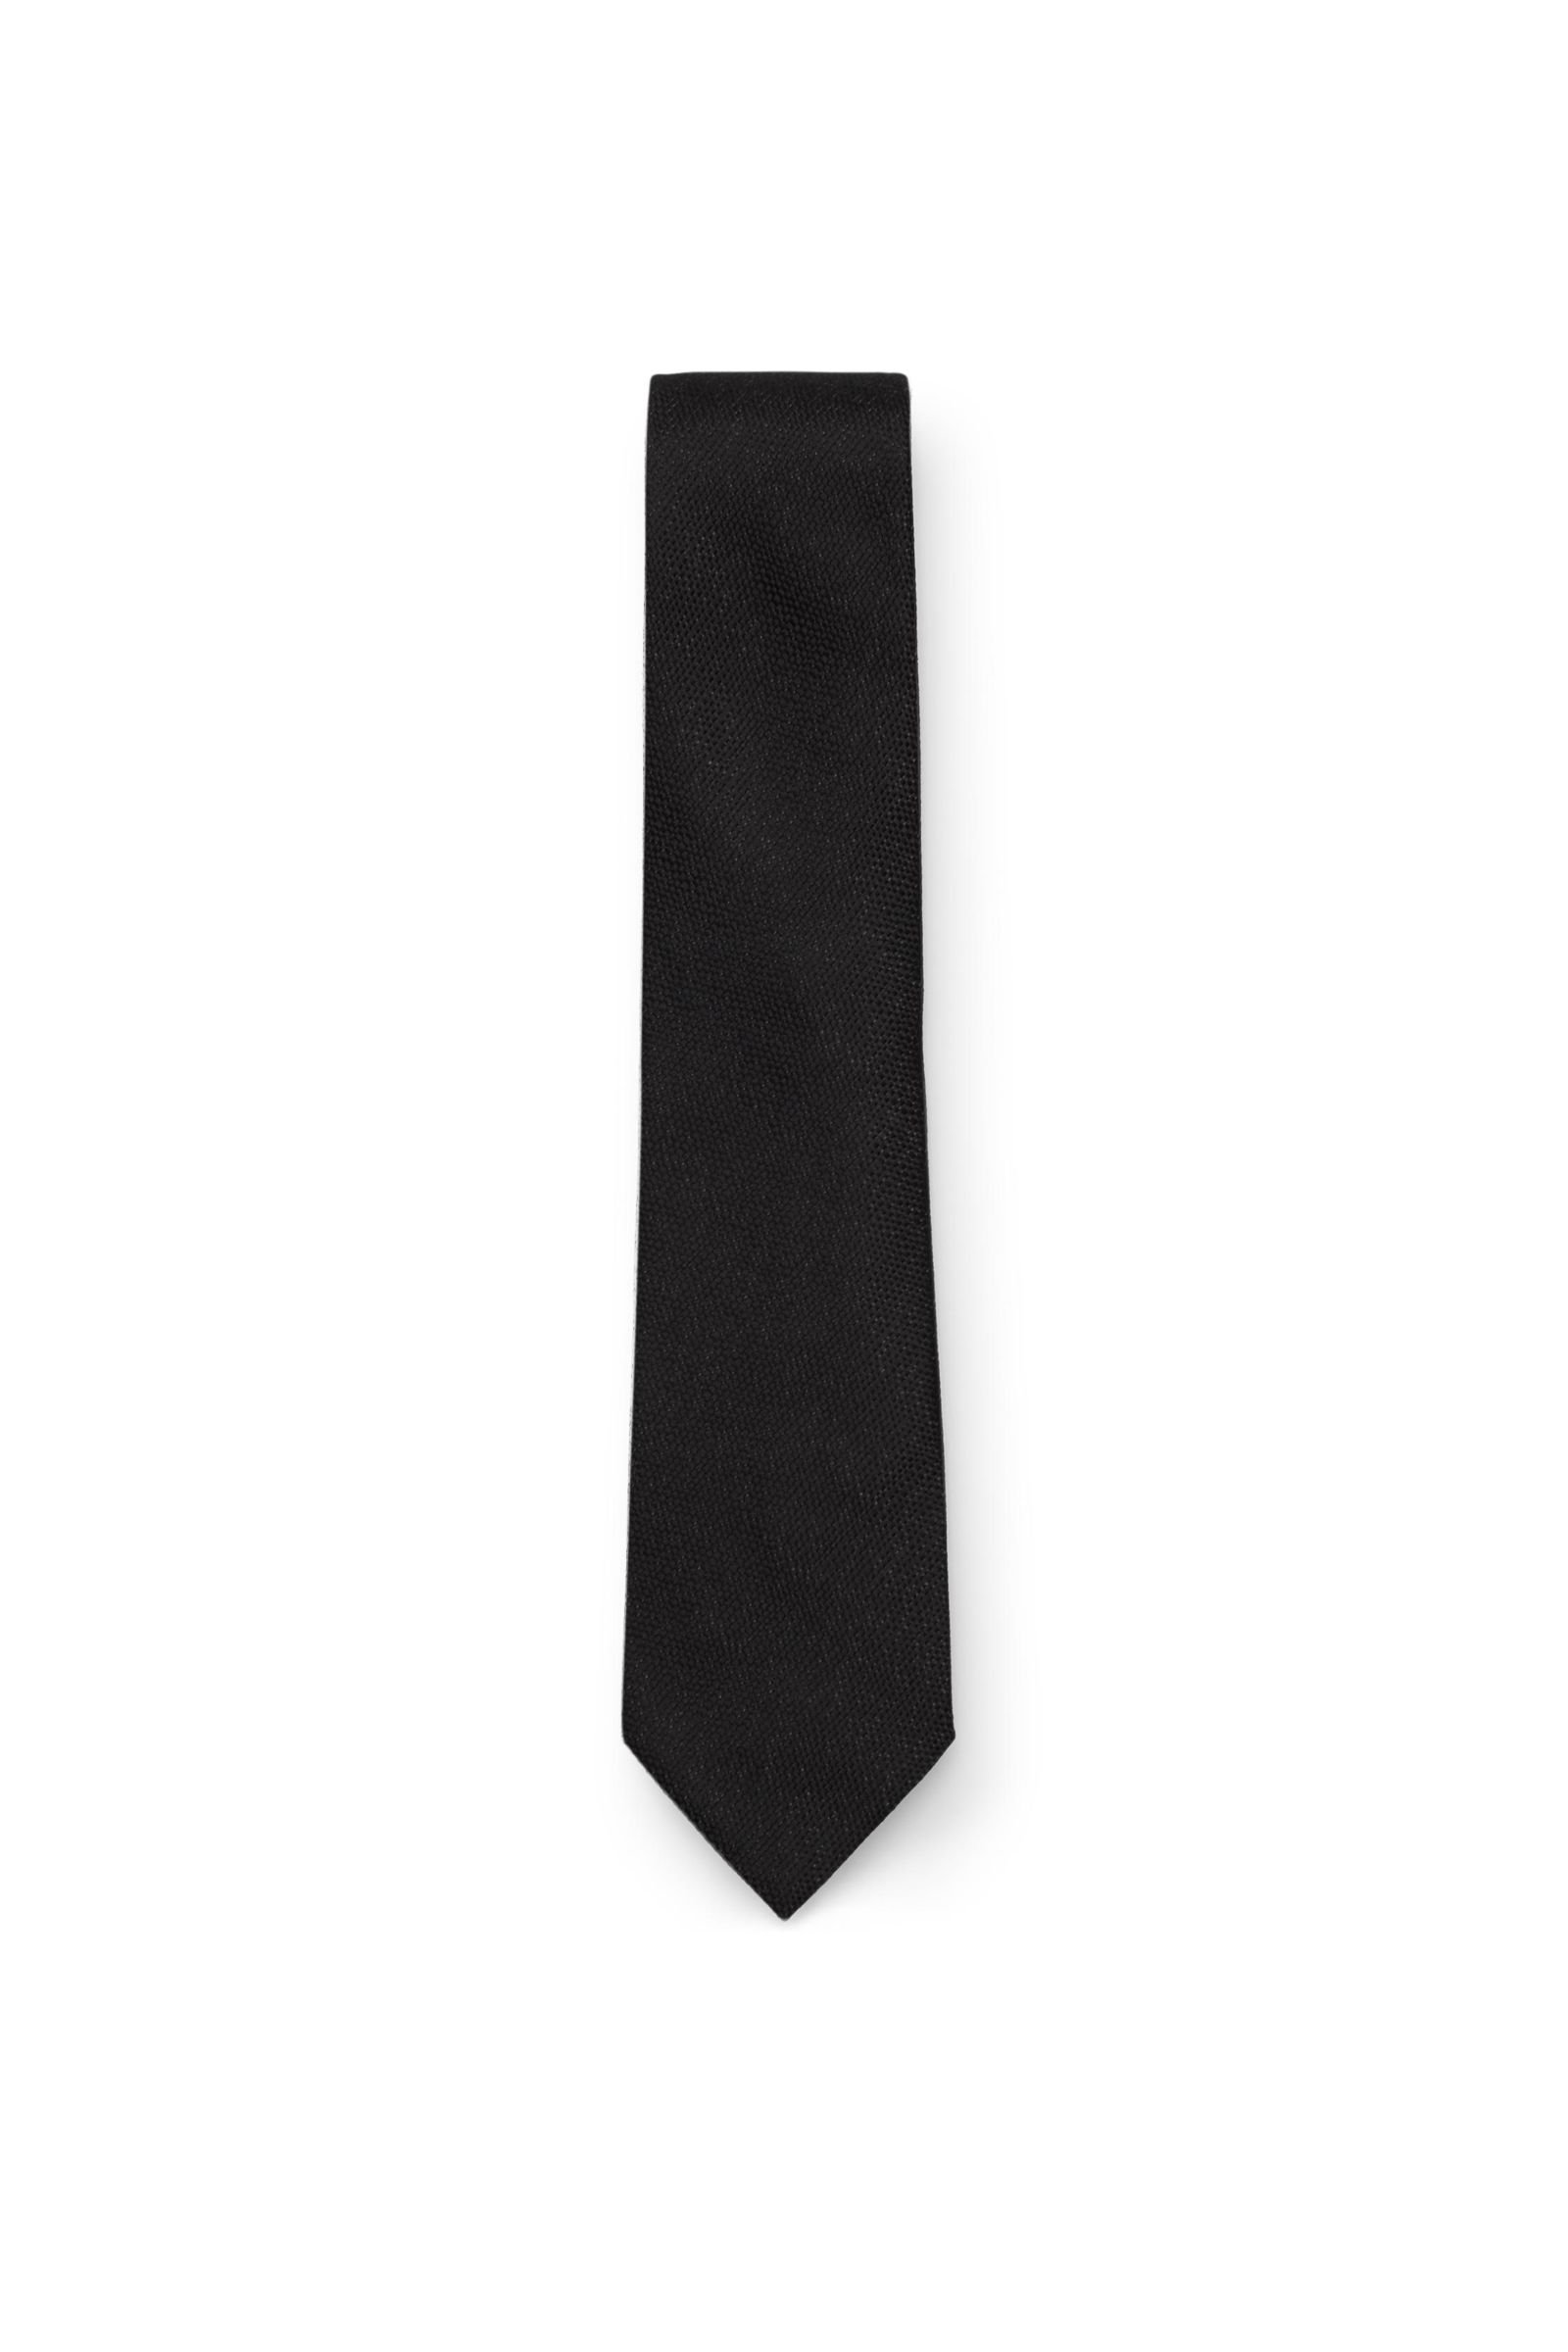 Silk tie black